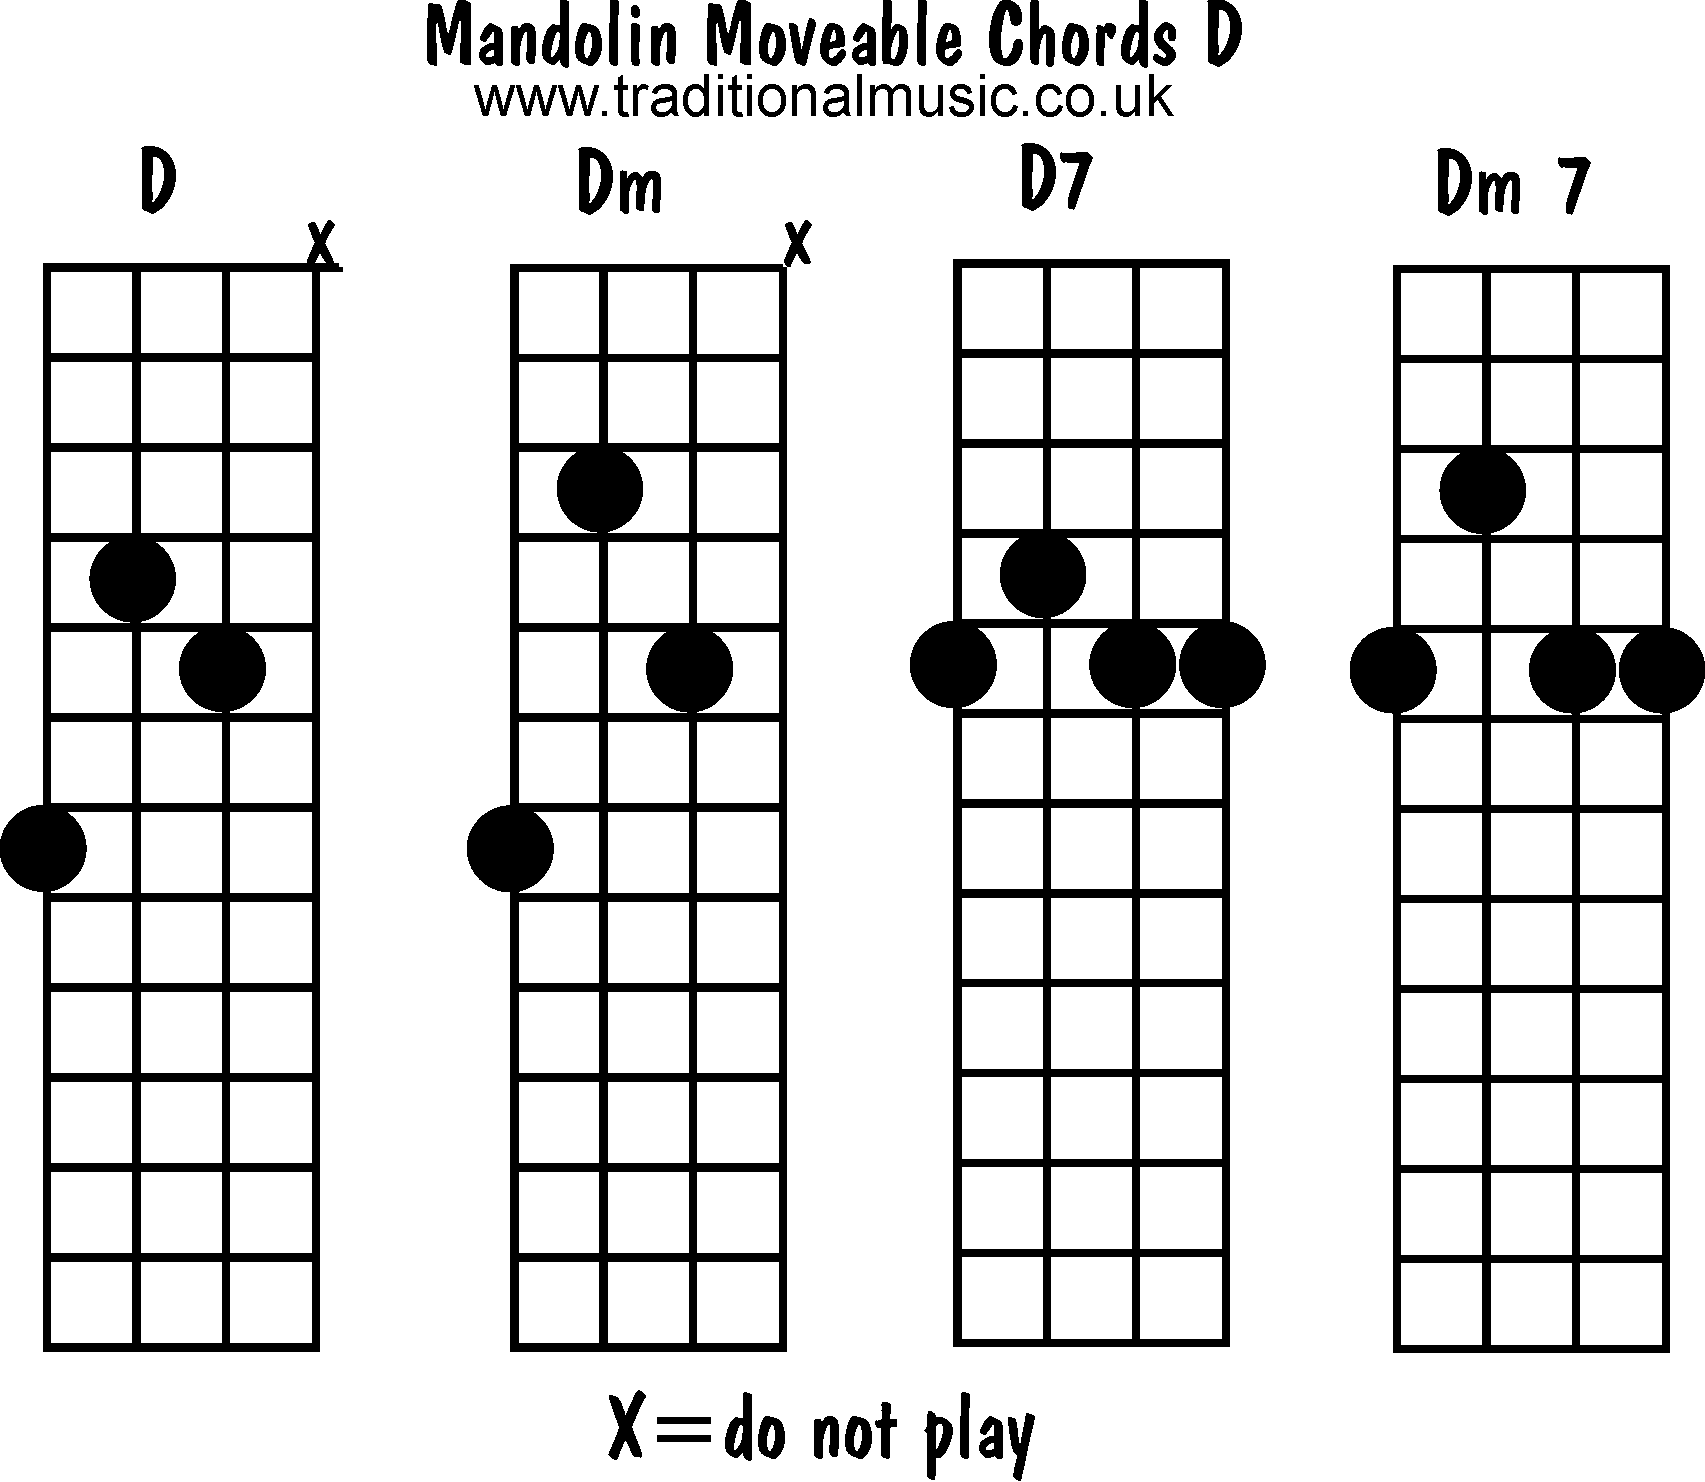 Moveable mandolin chords: D, Dm, D7, Dm7